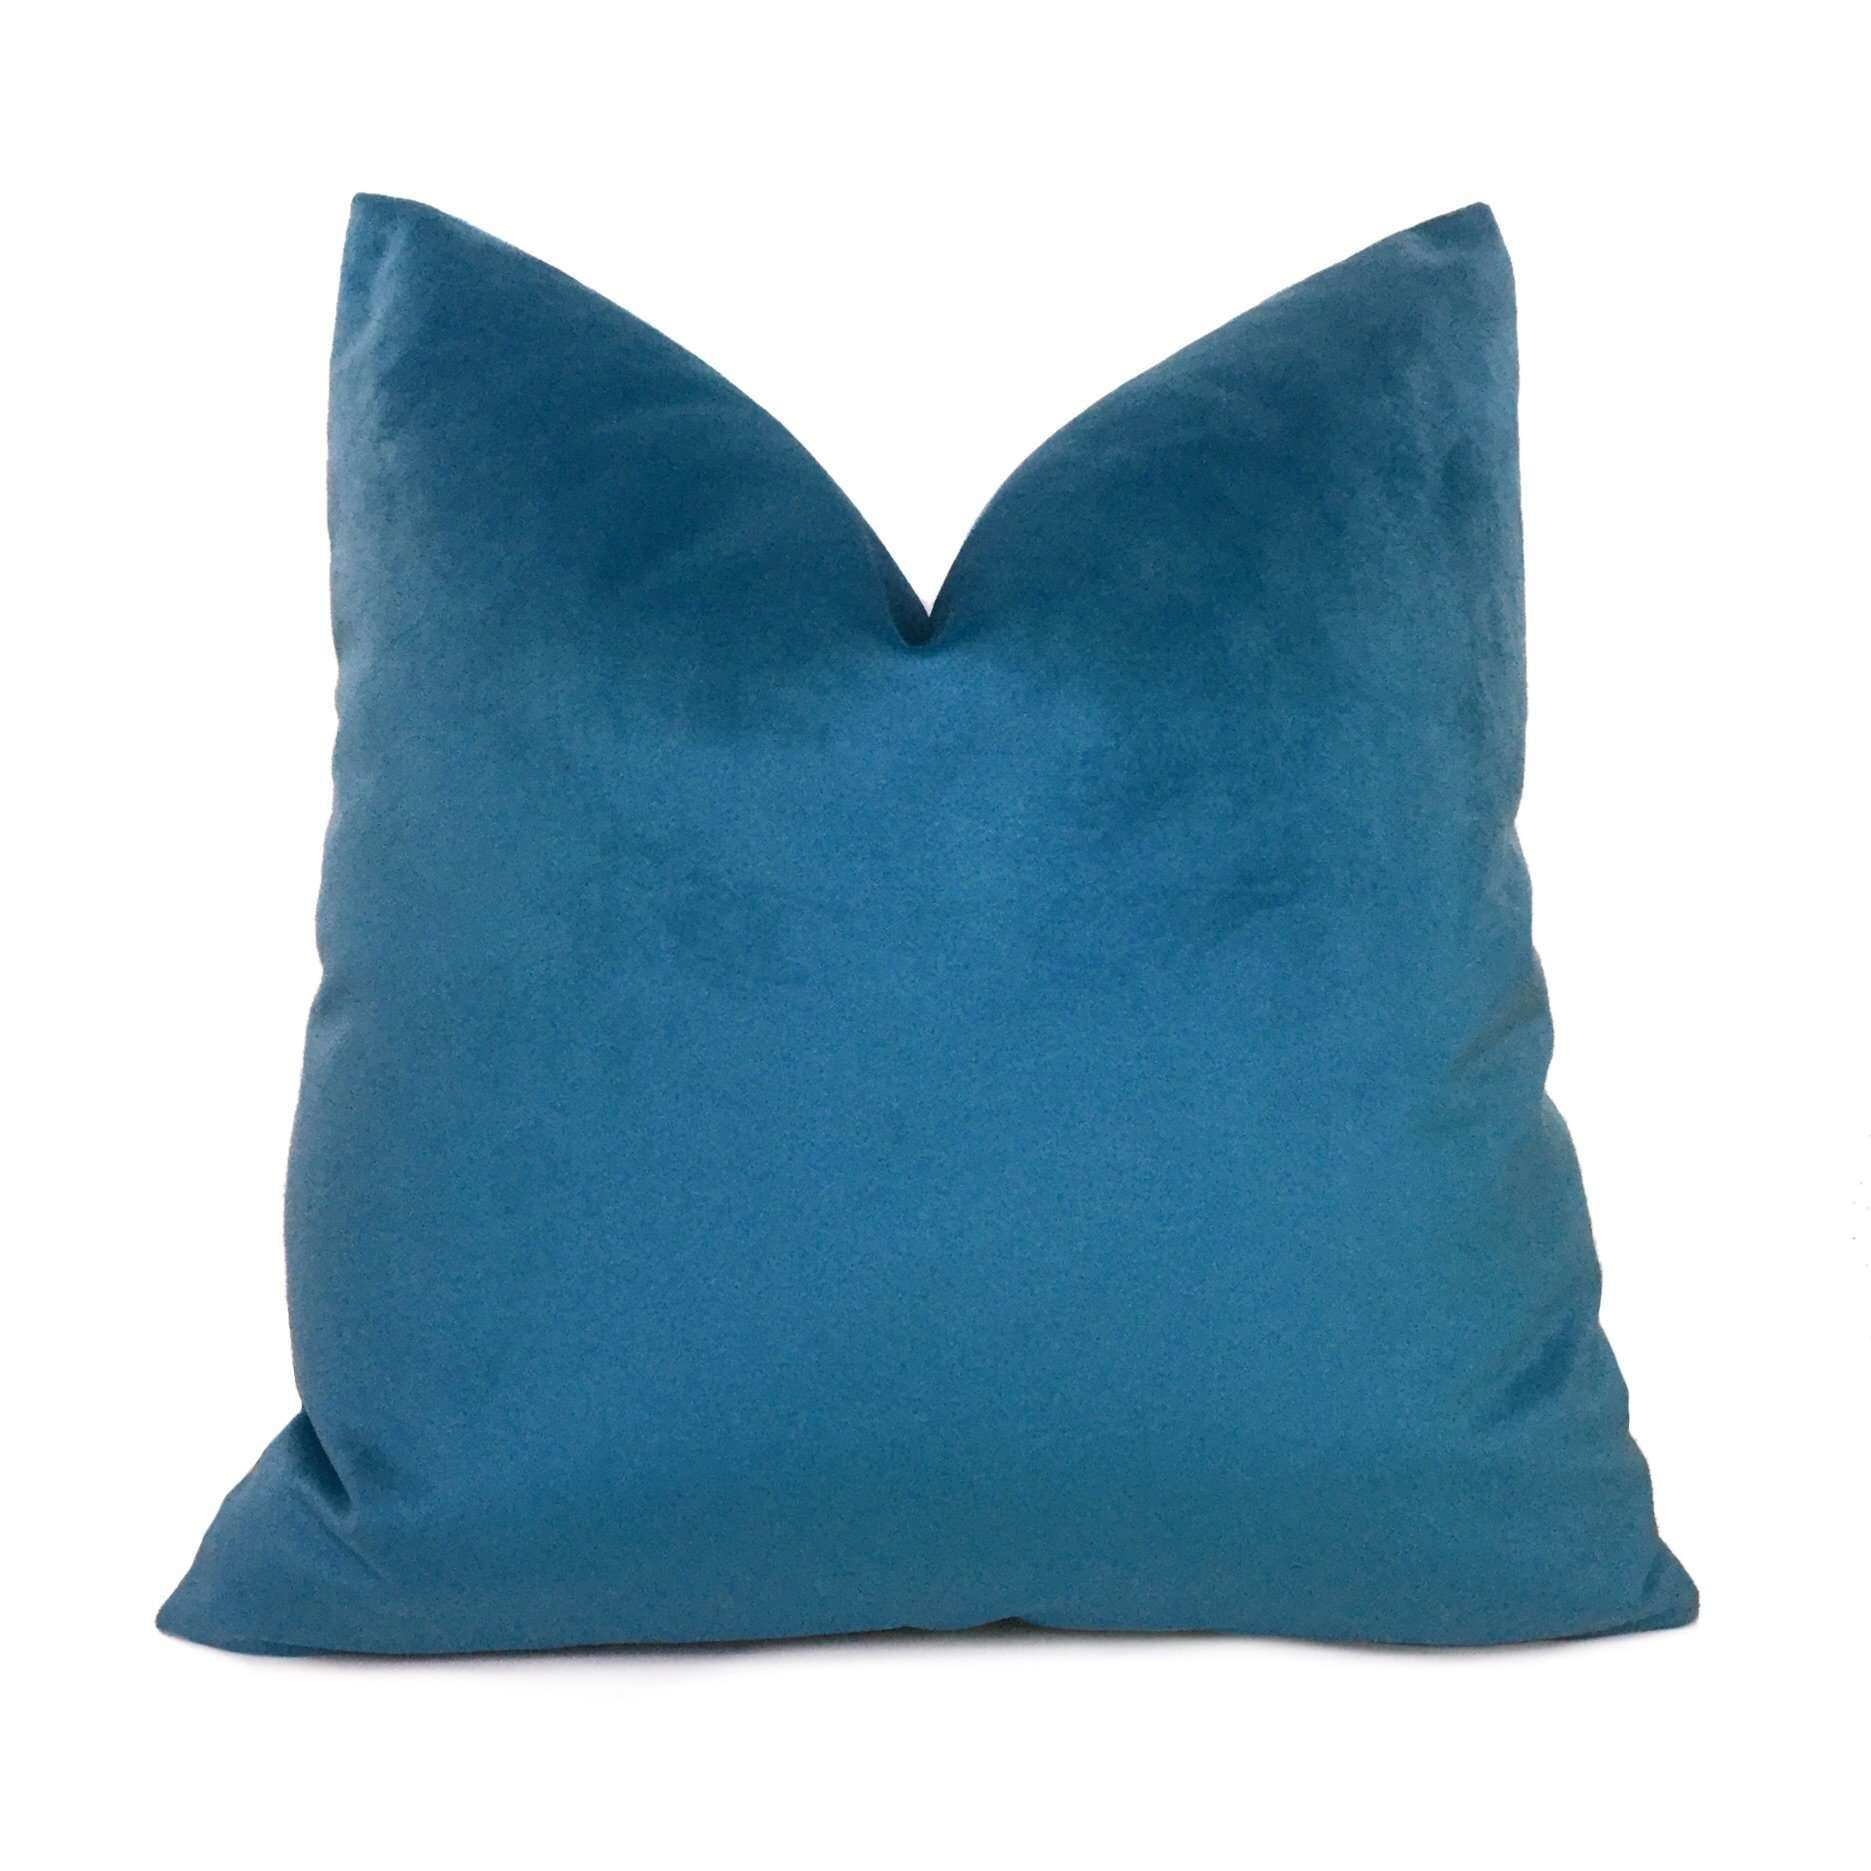 Solid Capri Blue Velvet Pillow Cover Cushion Pillow Case Euro Sham 16x16 18x18 20x20 22x22 24x24 26x26 28x28 Lumbar Pillow 12x18 12x20 12x24 14x20 16x26 by Aloriam